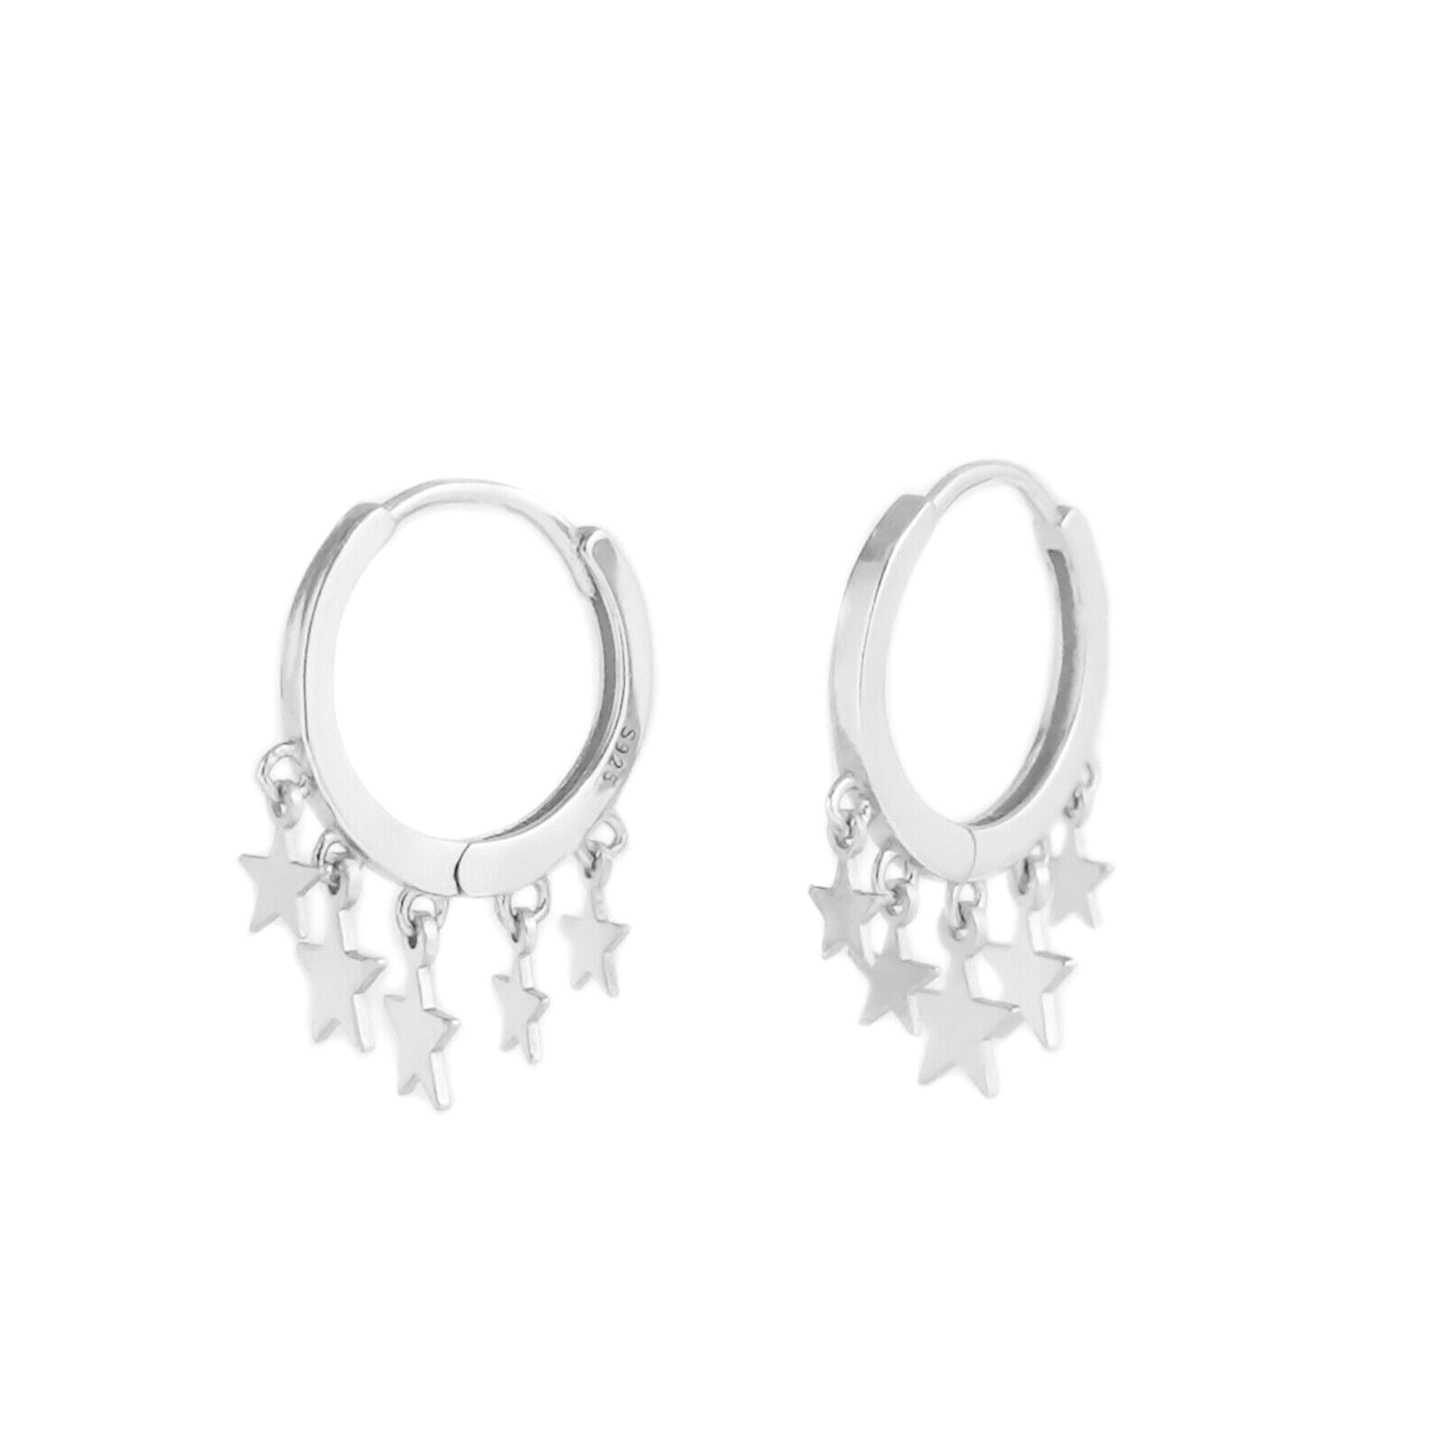 Sterling Silver Hinged Hoop Star Earrings with Charm Drops